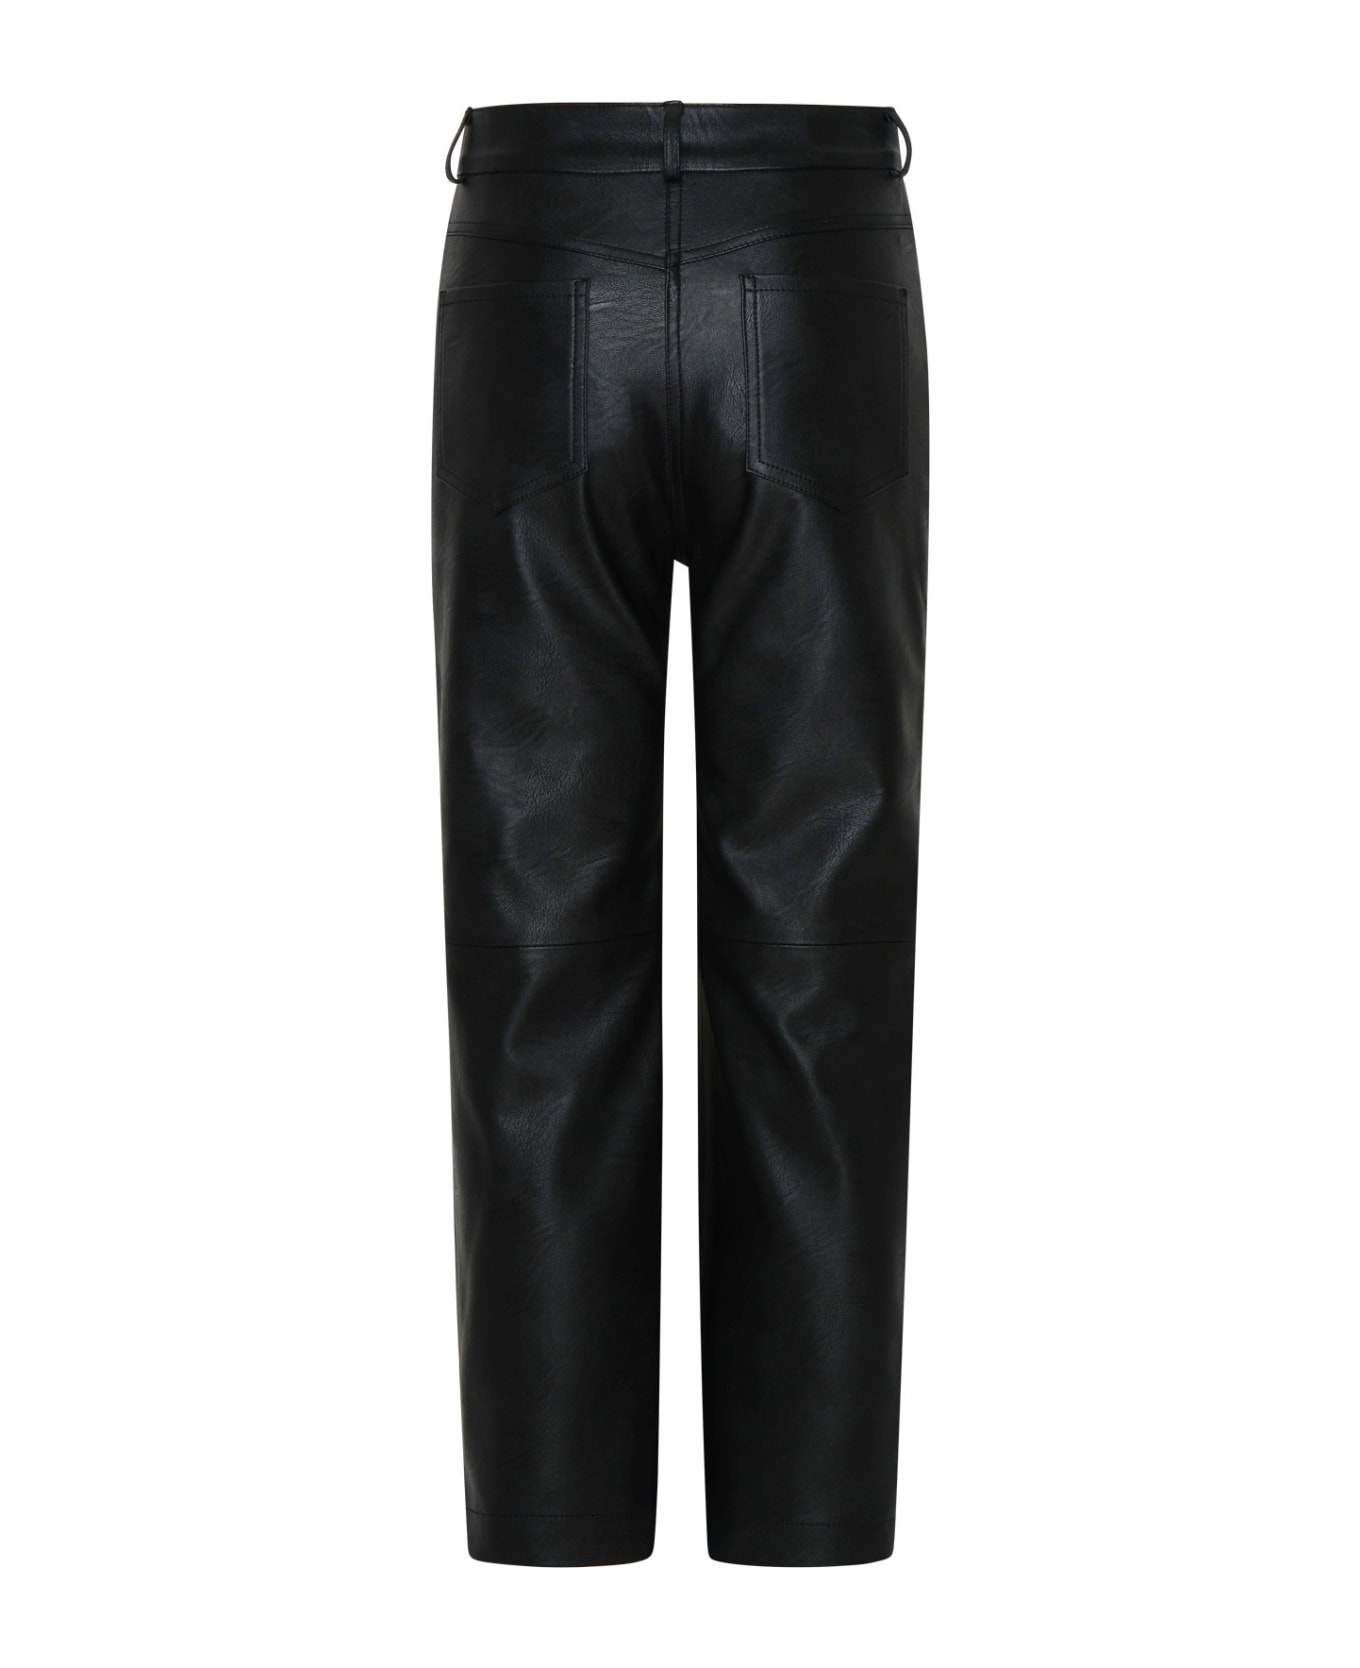 Stella McCartney Polyester Blend Pants - black